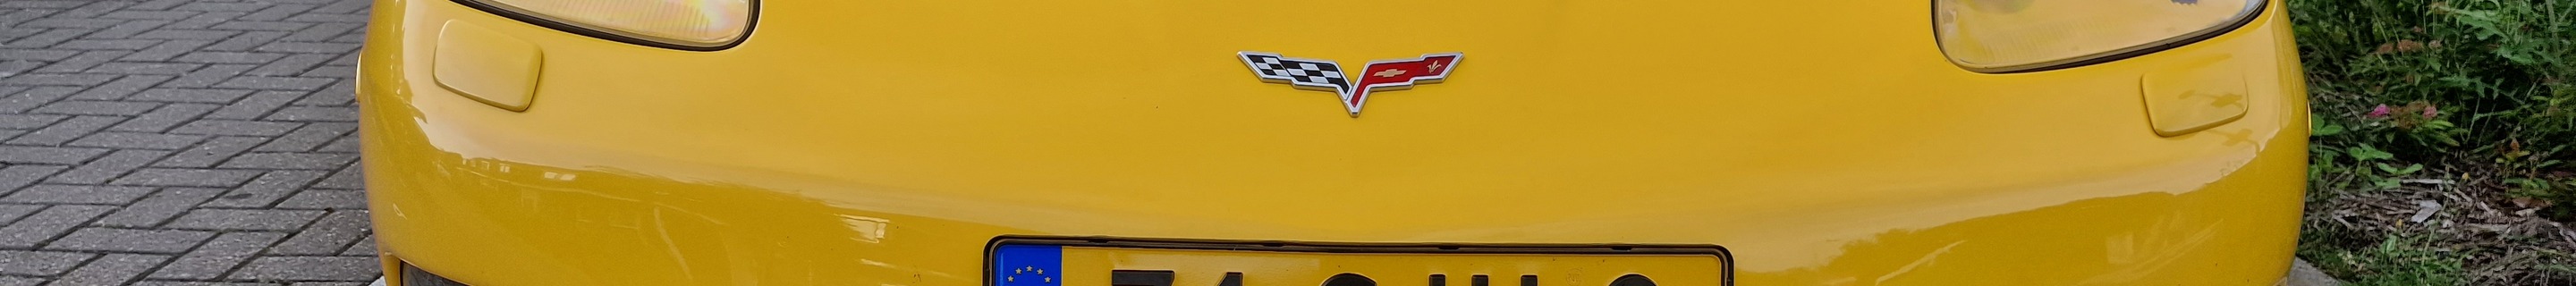 Callaway Corvette C6 Convertible